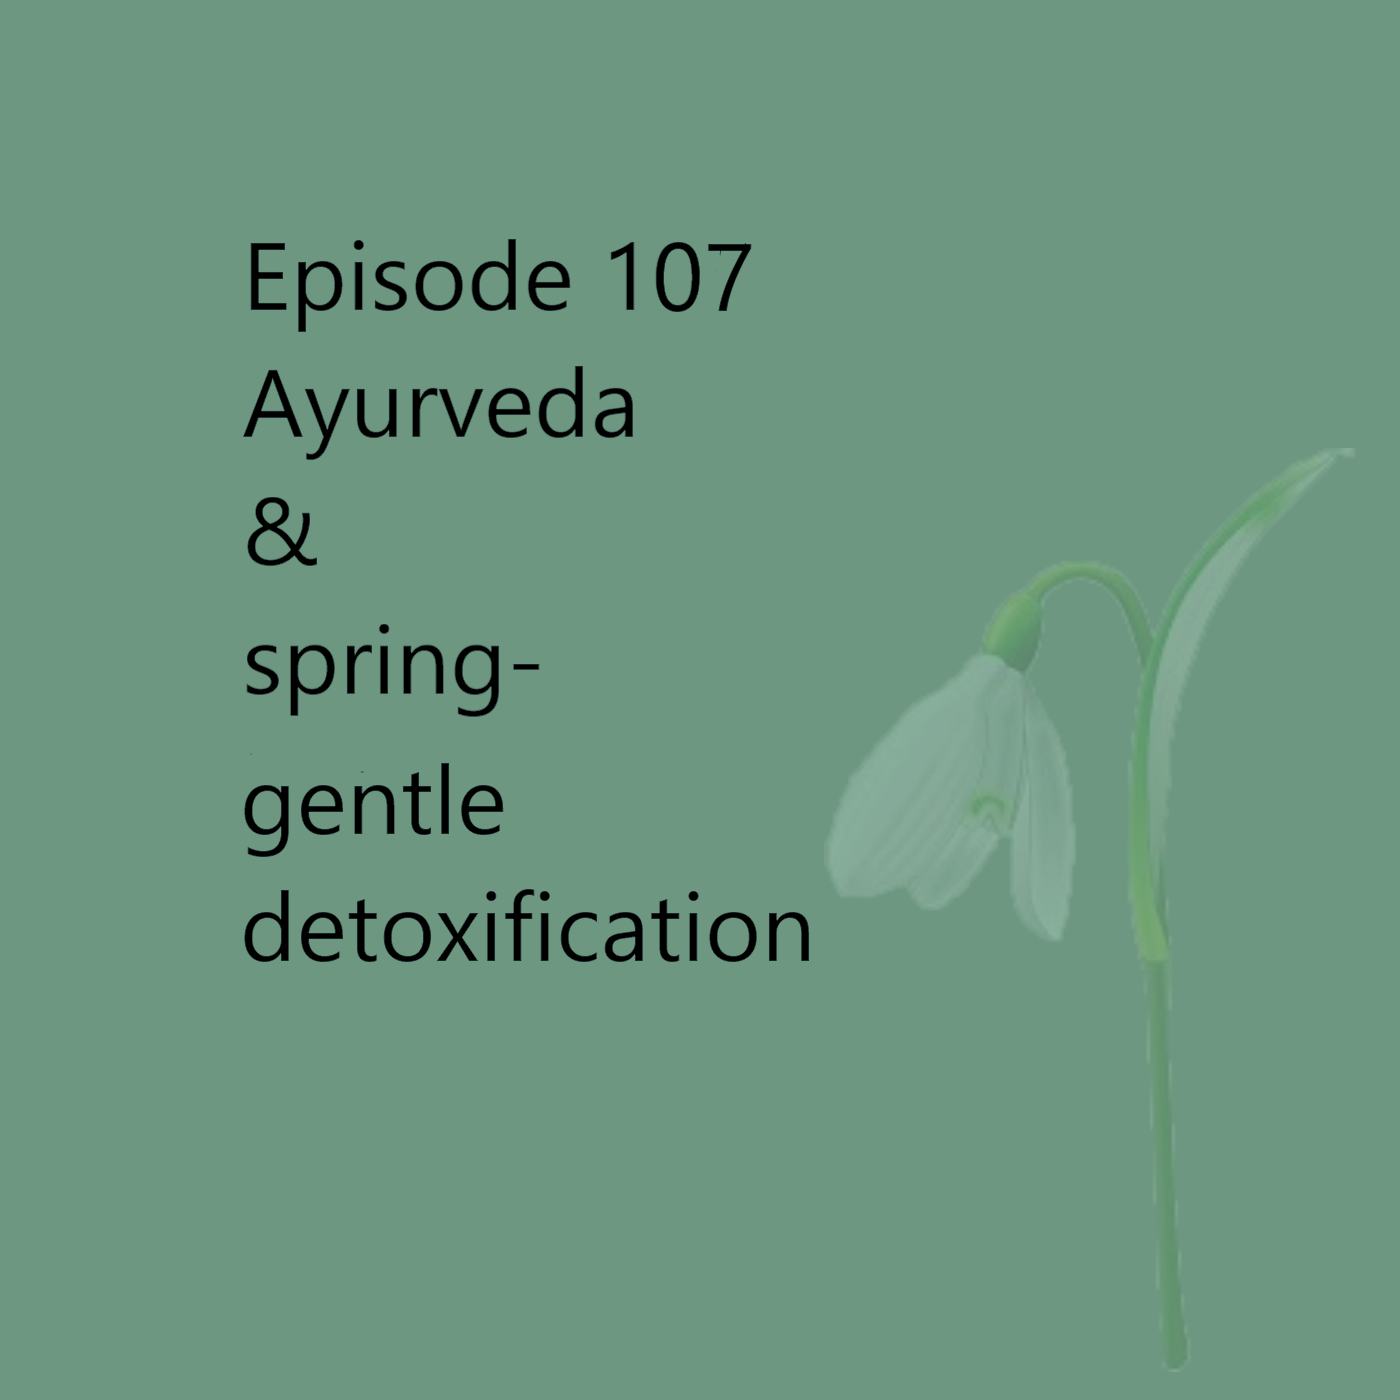 Episode 107 Ayurvedic Life - From Winter to Spring #2